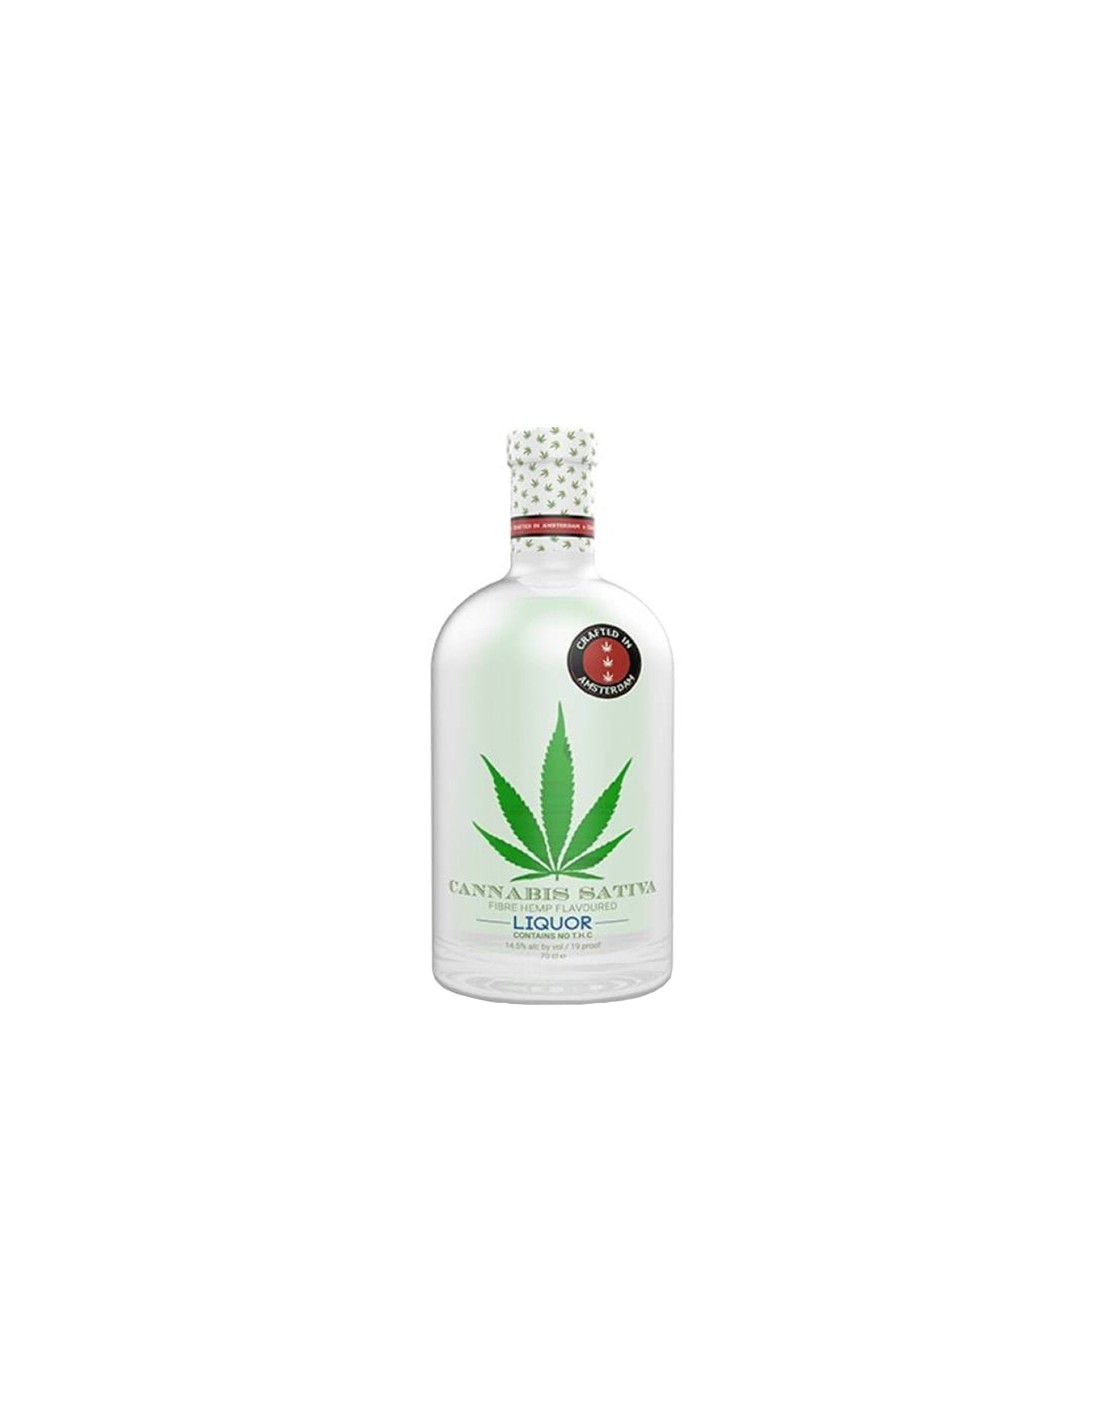 Lichior Cannabis Sativa 14.5% alc., 0.7L, Danemarca alcooldiscount.ro